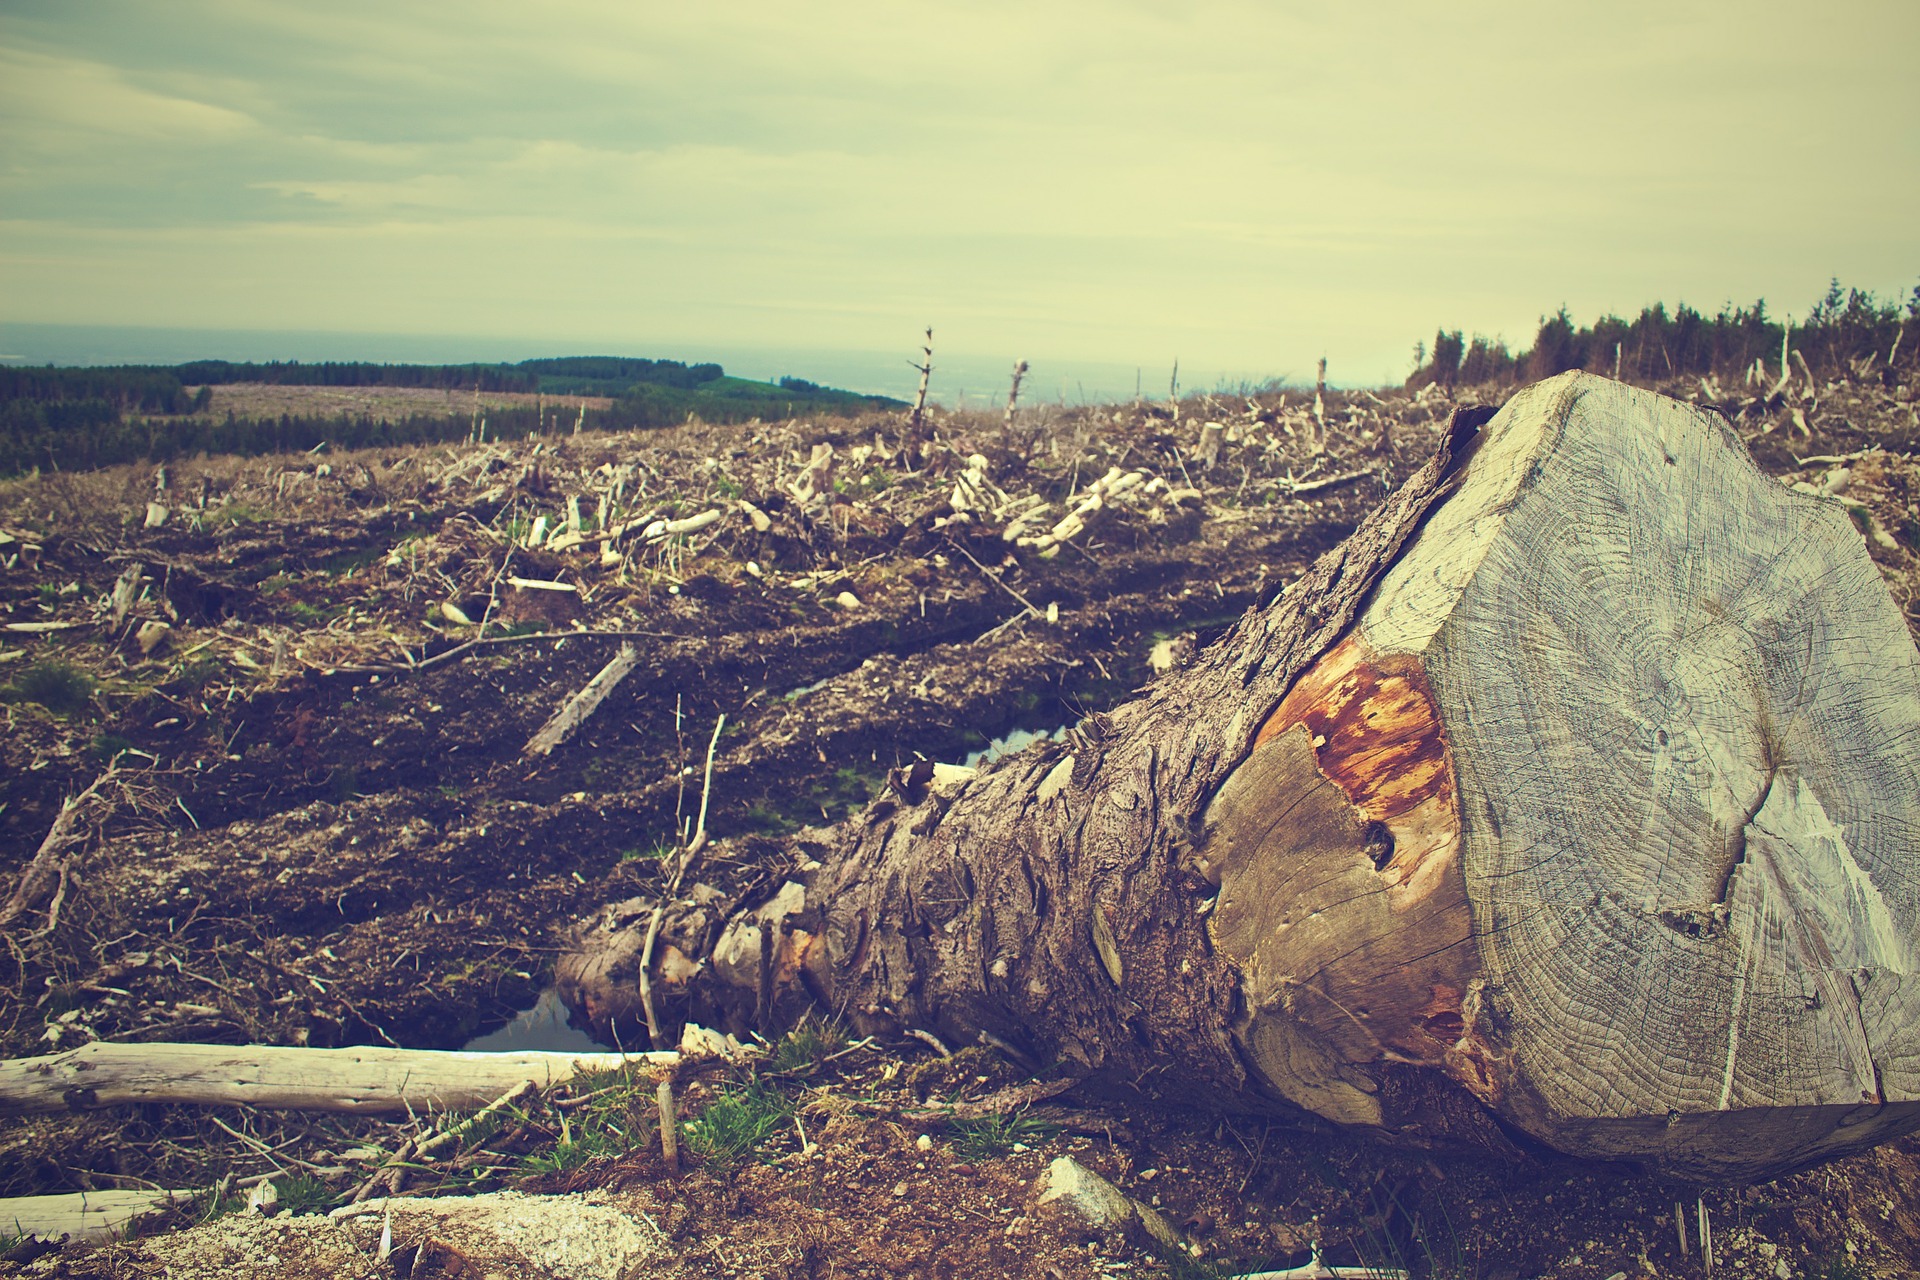 Na COP26, ministro se recusa a falar do “combo do desmatamento” que tramita no Congresso